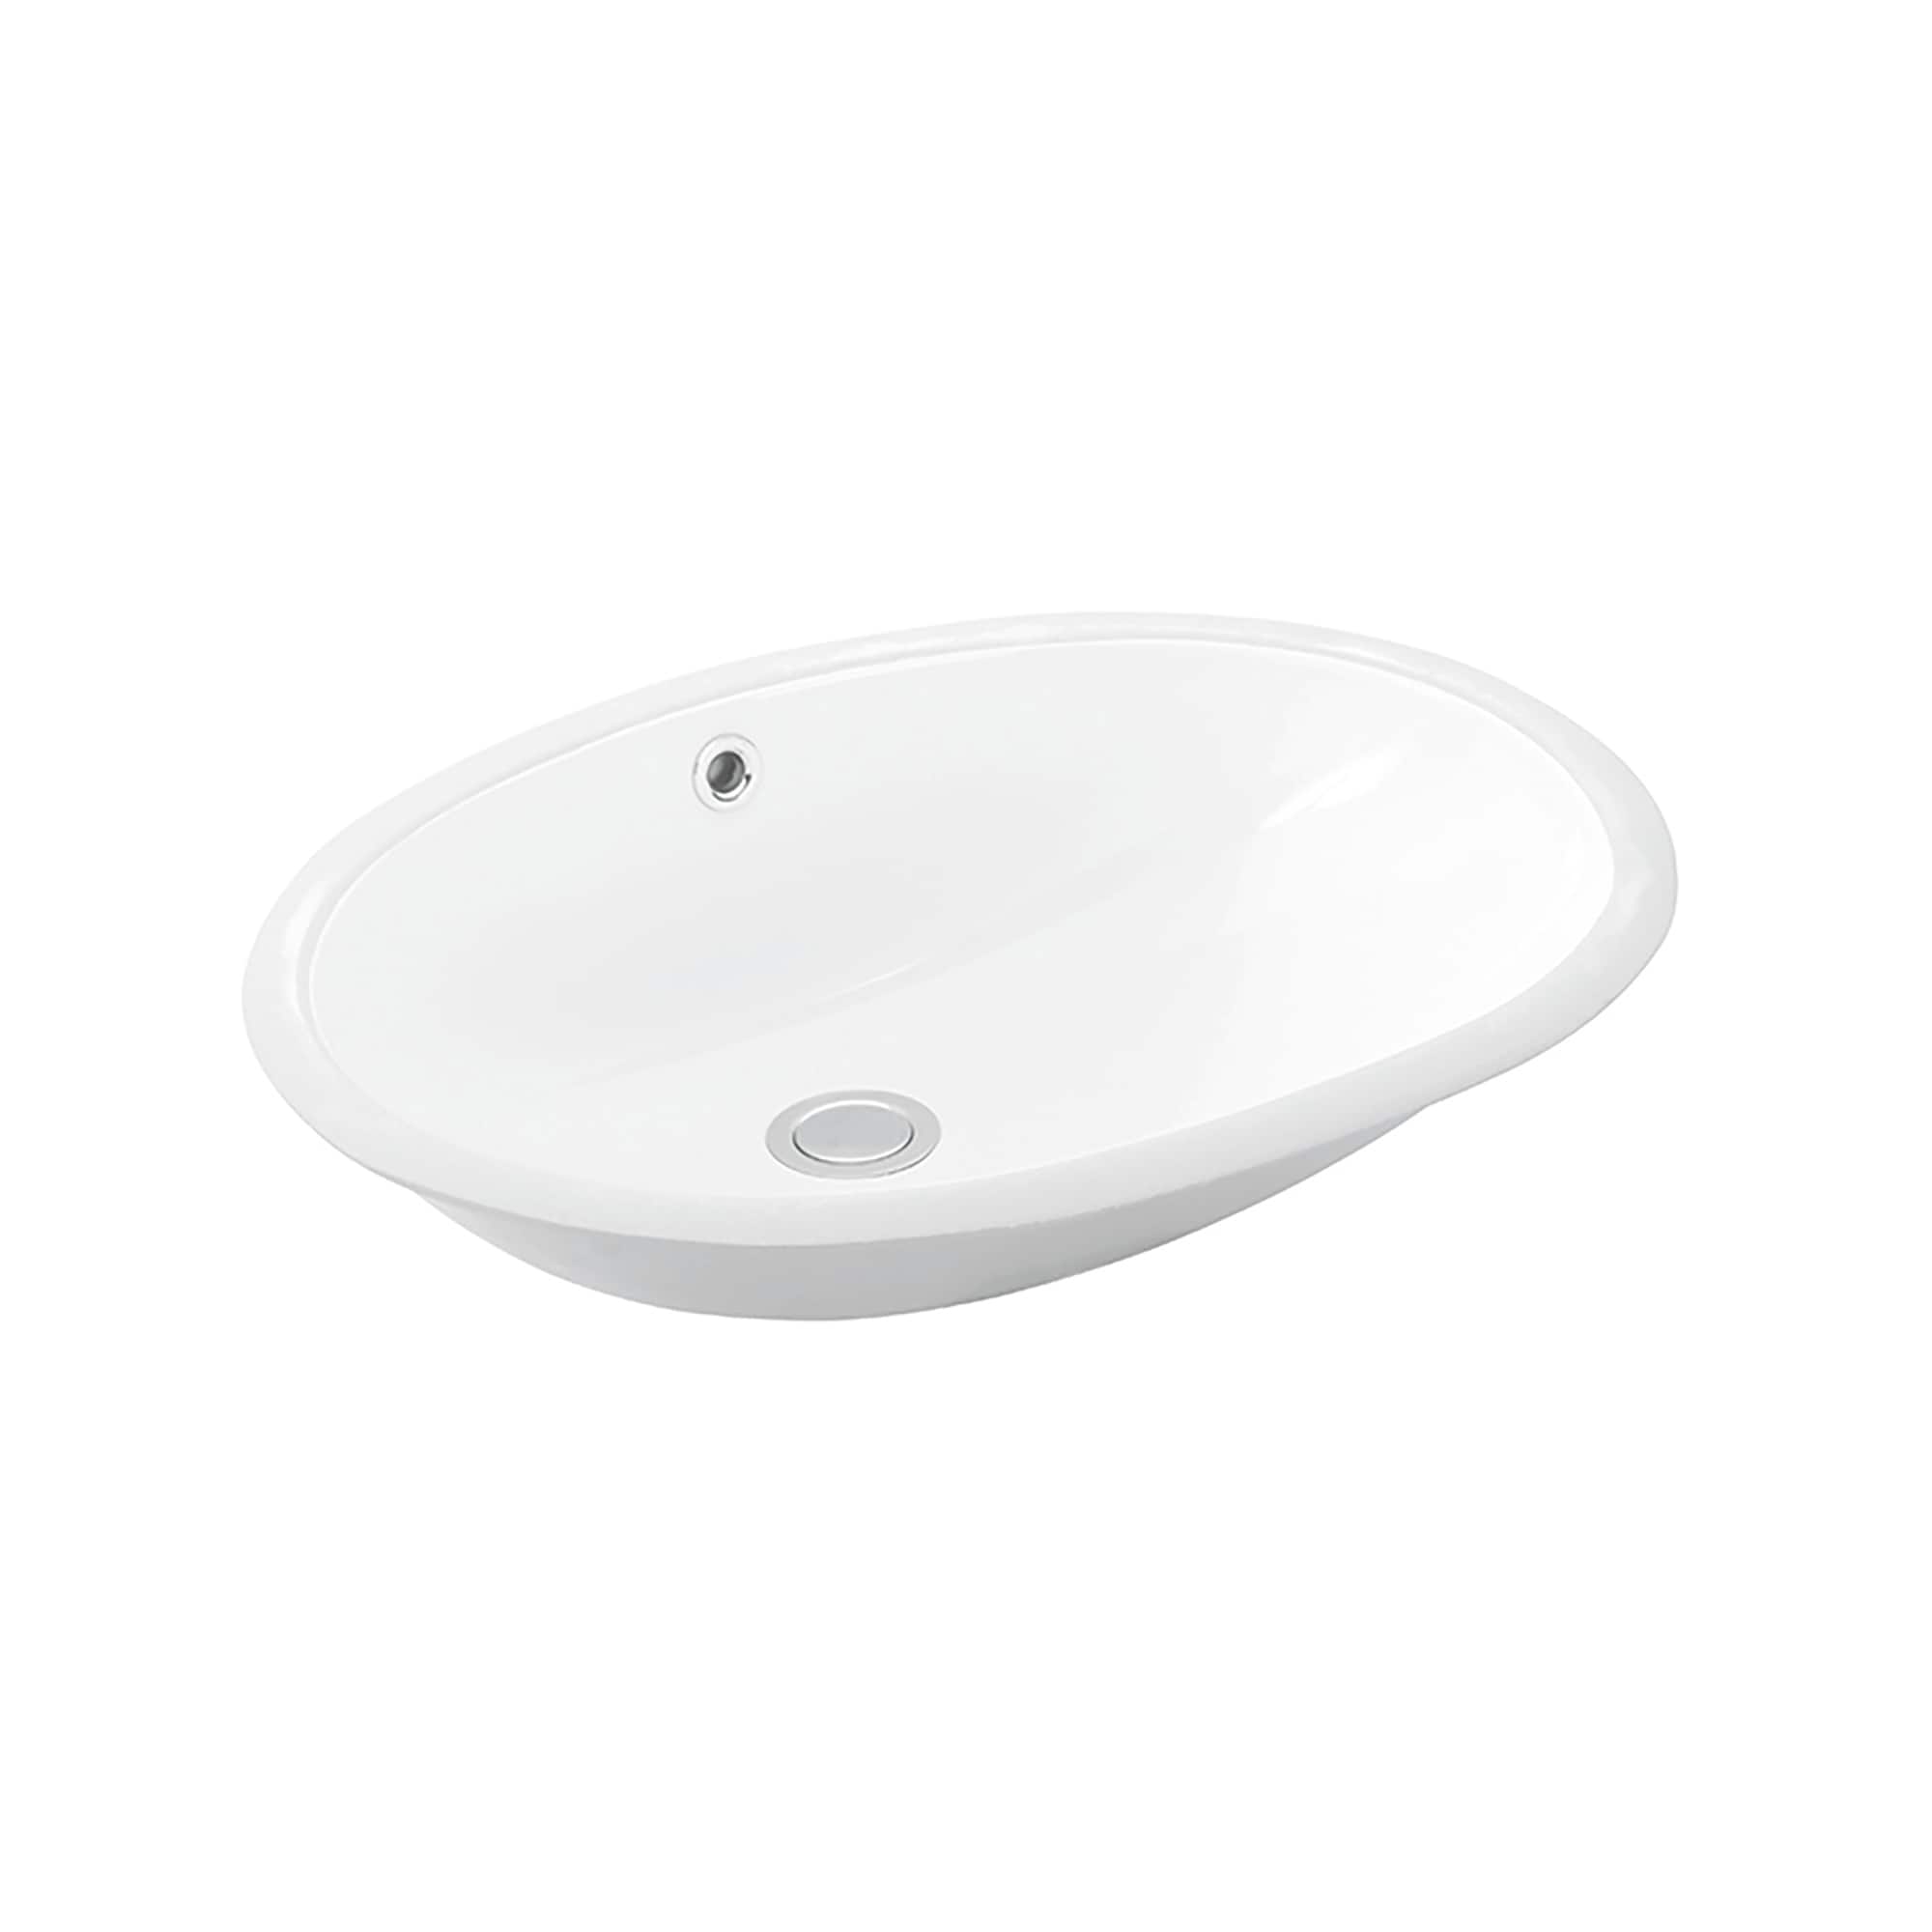 Basic Bathroom Sinks at Lowes.com